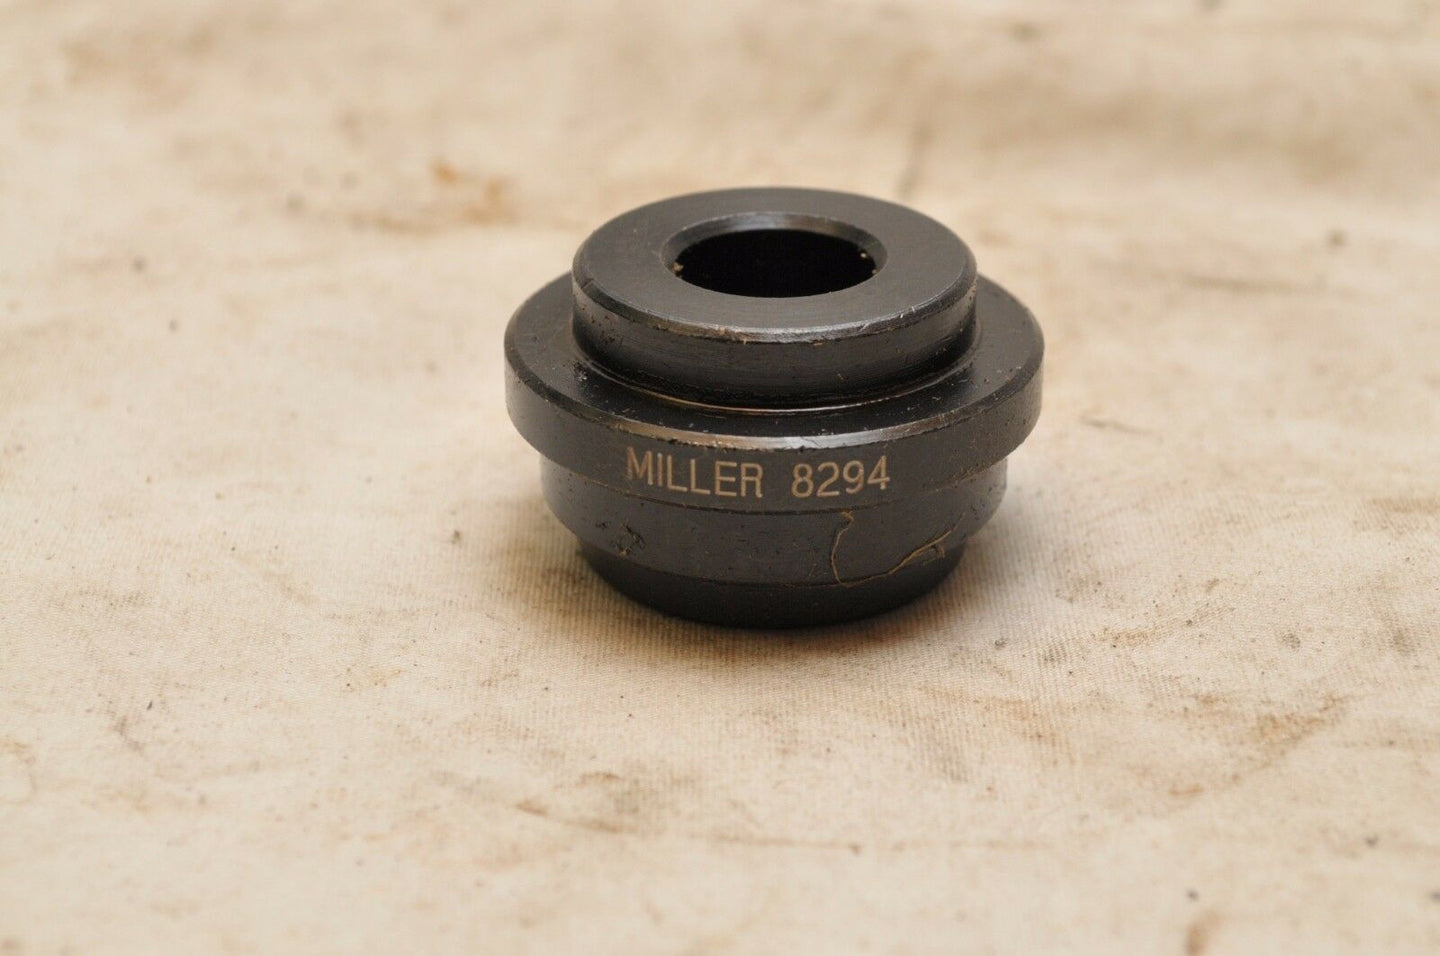 Miller 8294 BEARING INSTALLER DODGE JEEP MOPAR SPECIAL SERVICE TOOL SST